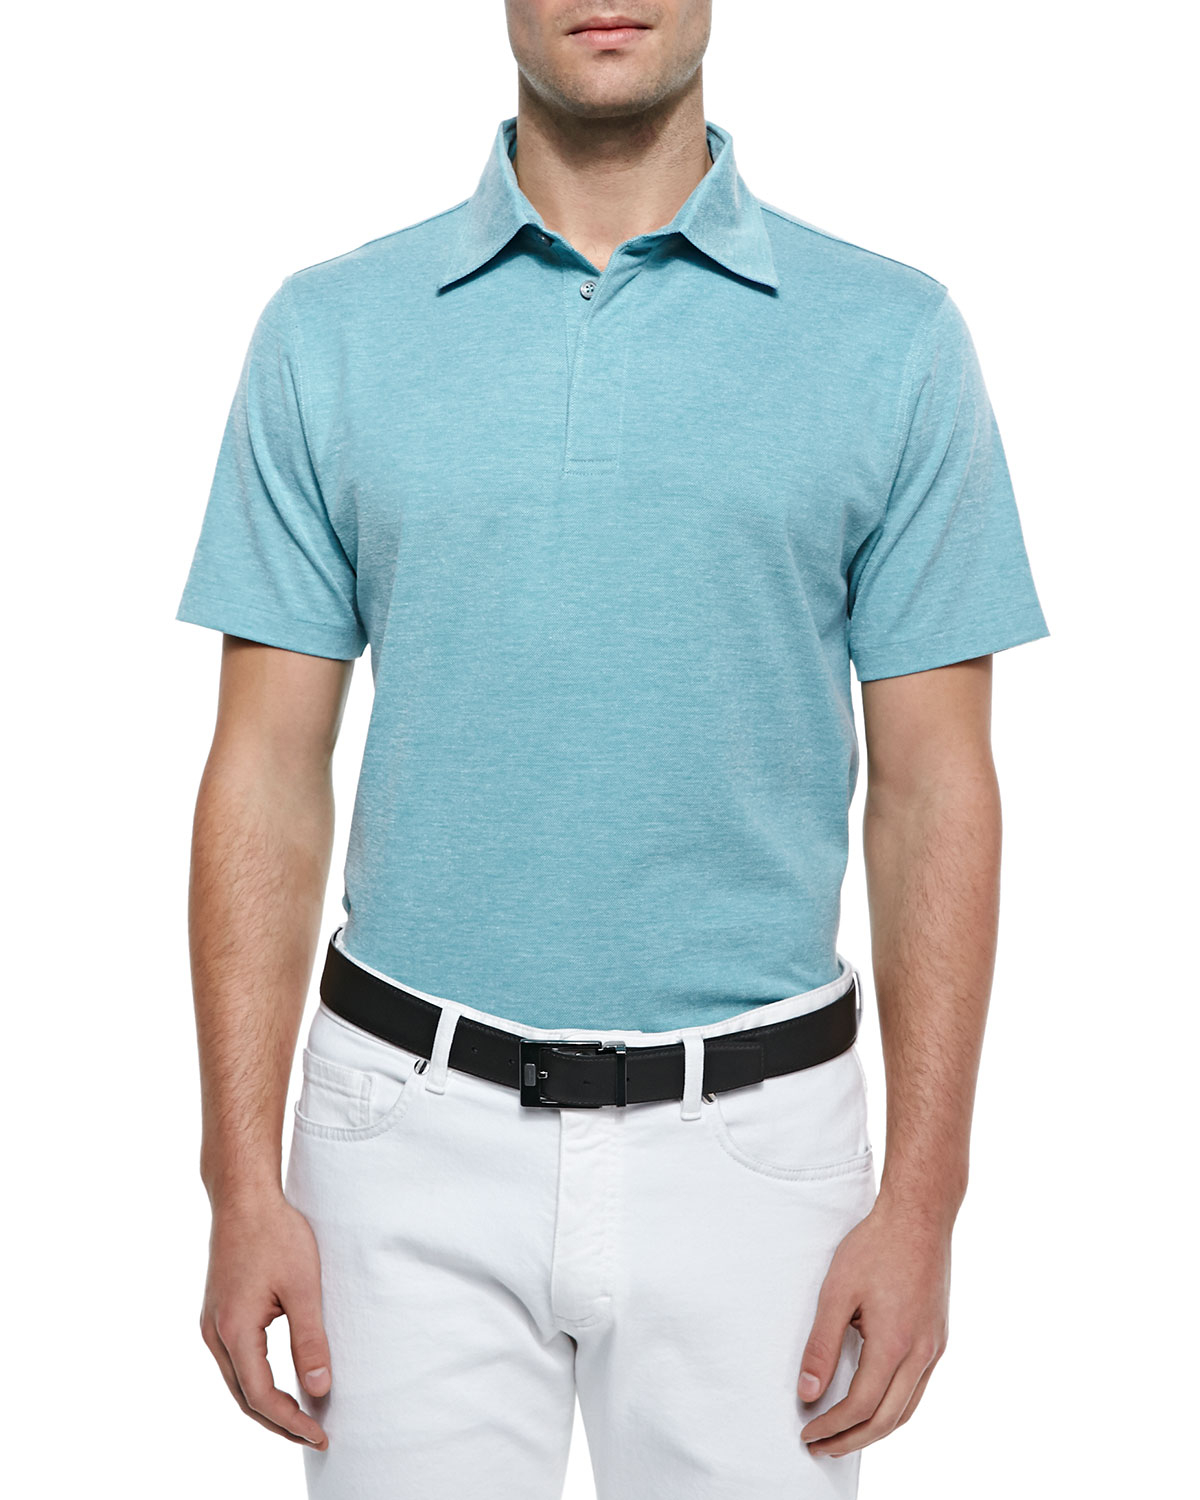 Lyst - Ermenegildo Zegna Spread Collar Polo Shirt in Blue for Men